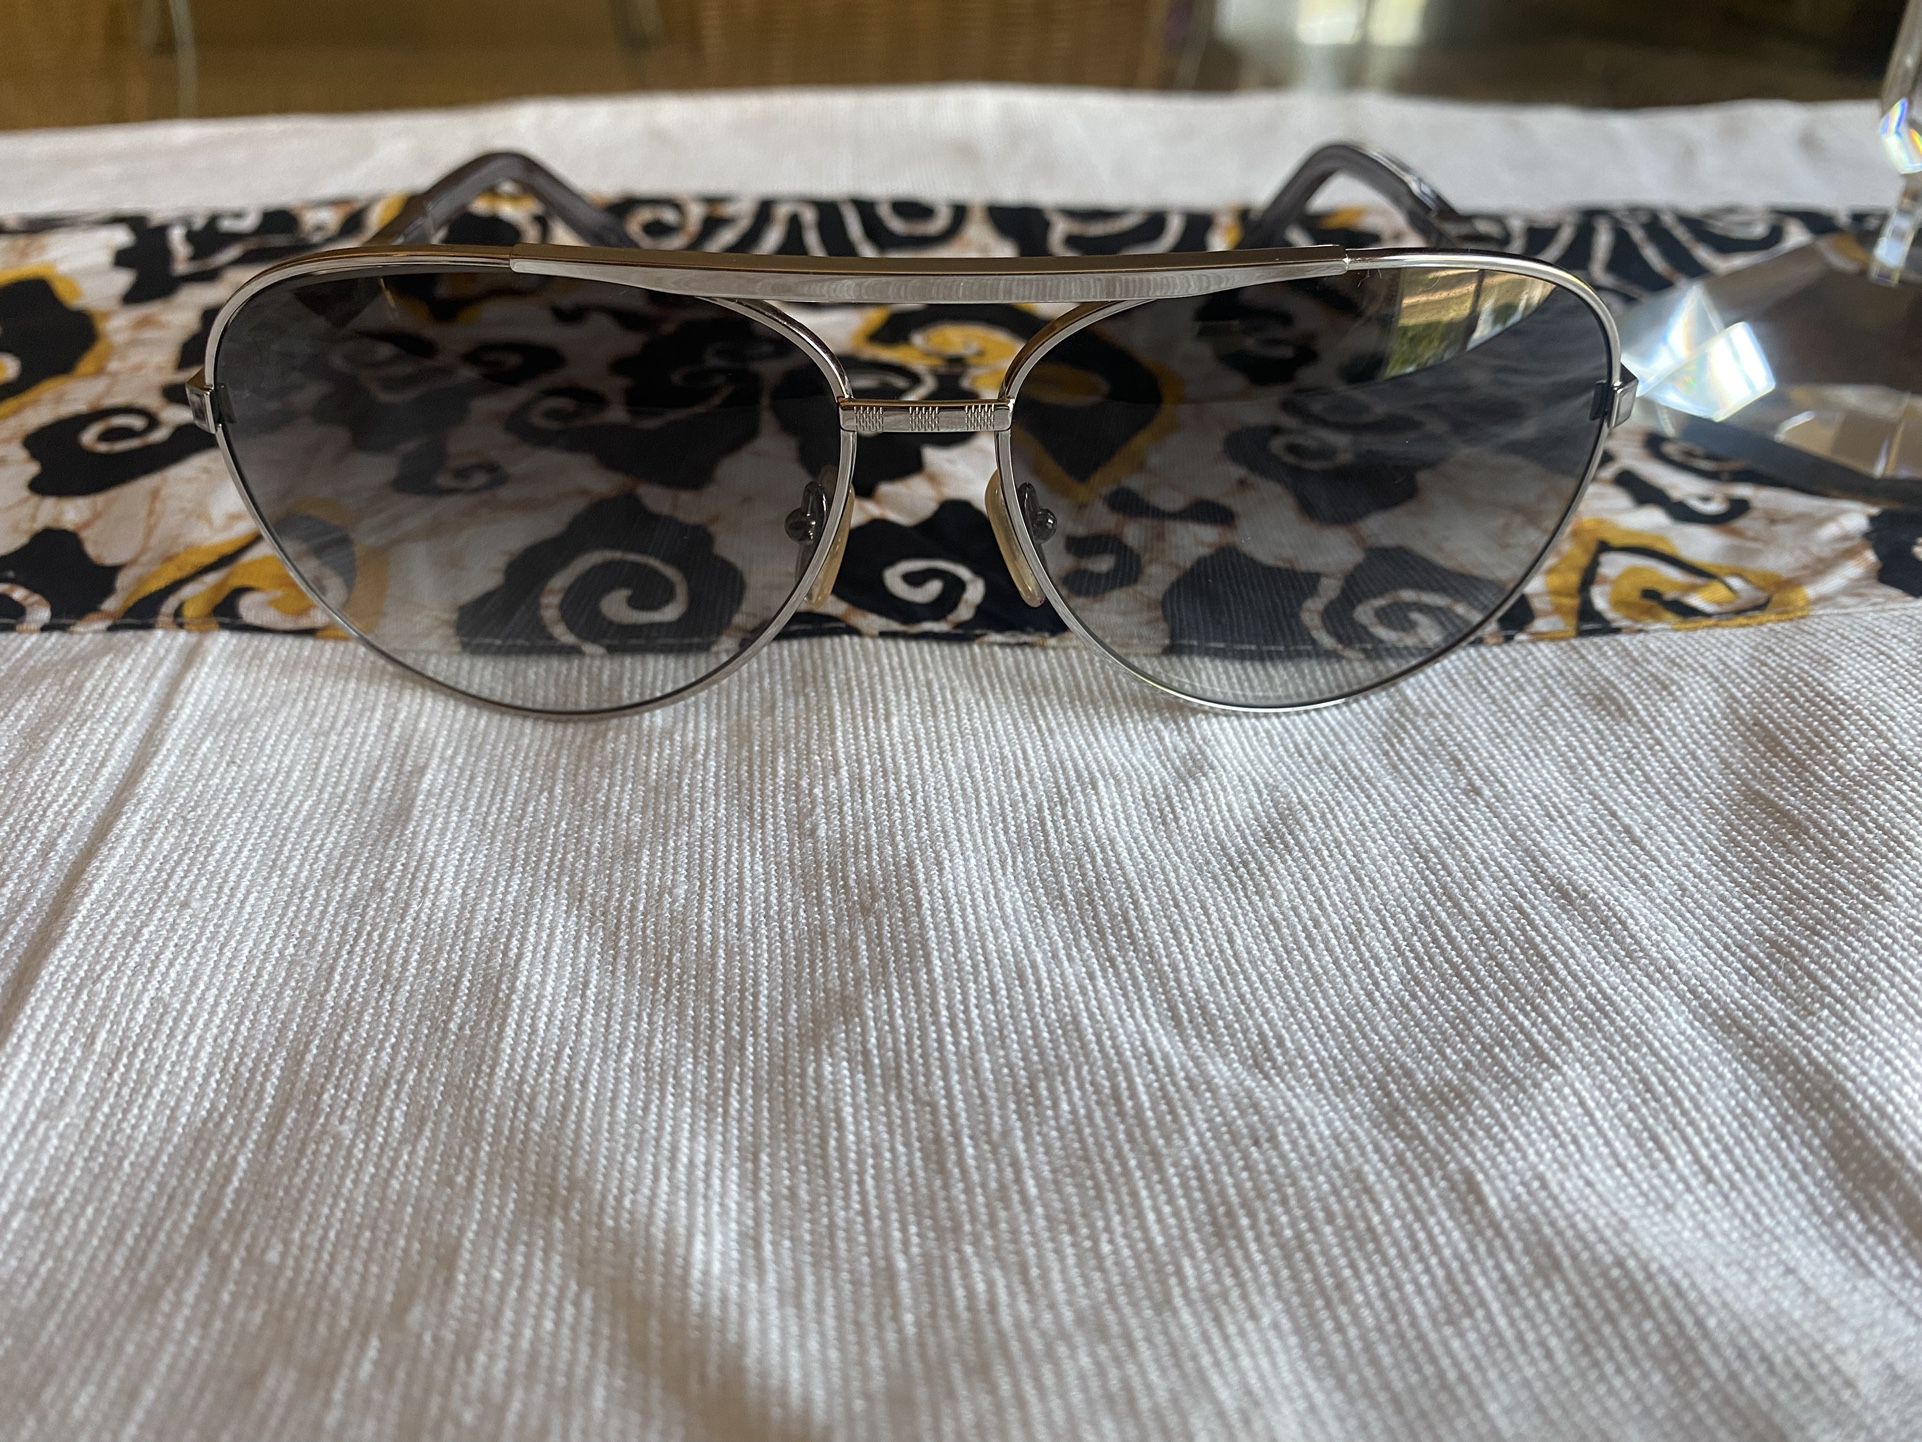 Authentic Louis Vuitton Attitude Pilot sunglasses for Sale in Los Angeles,  CA - OfferUp